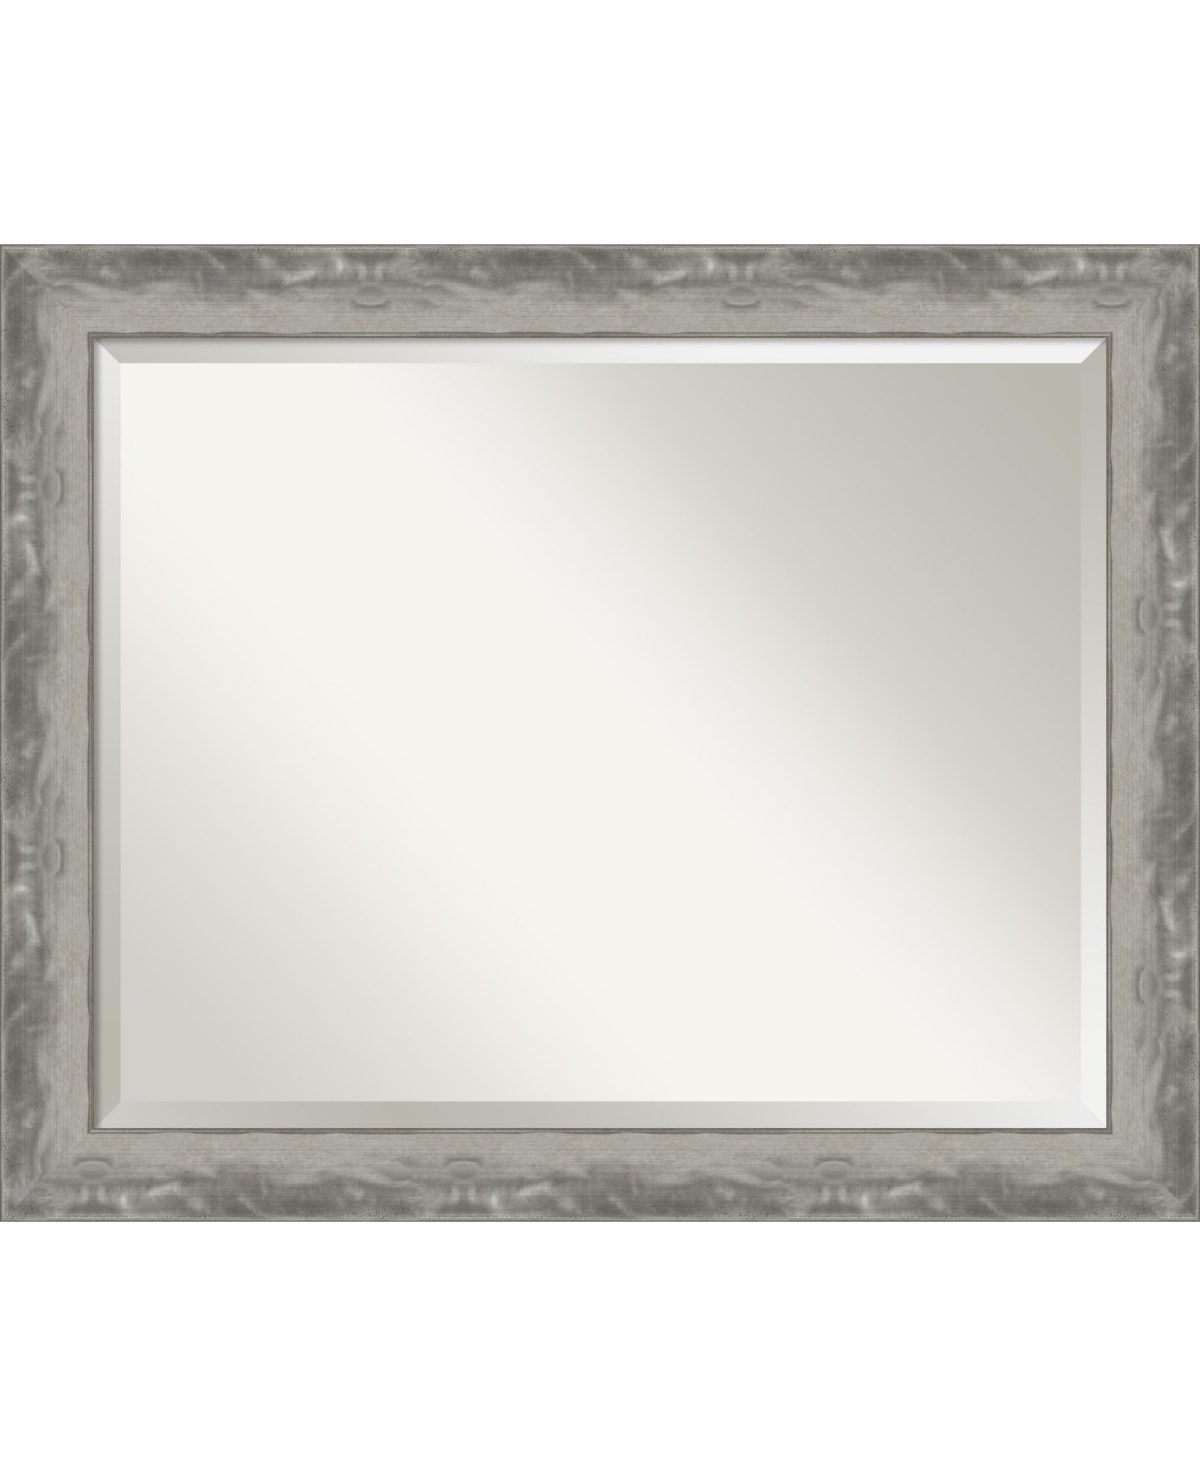 Waveline Silver-tone Framed Bathroom Vanity Wall Mirror, 32.38" x 26.38" - Silver